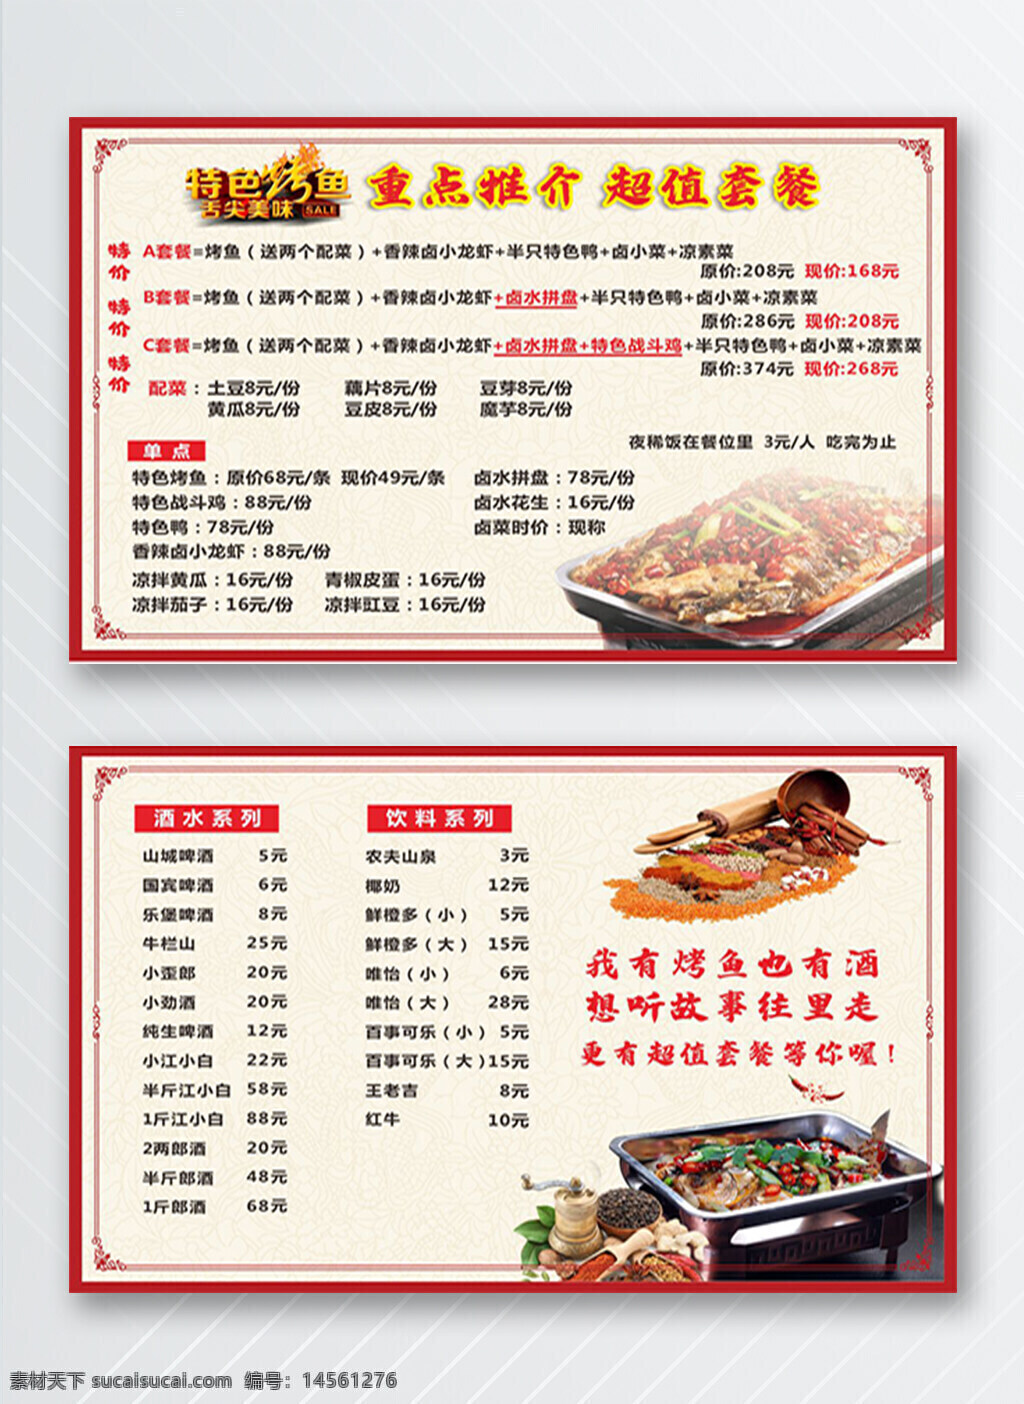 dm宣传单 红色宣传单 烤鱼店开业 餐饮美食 价格表 特色烤鱼